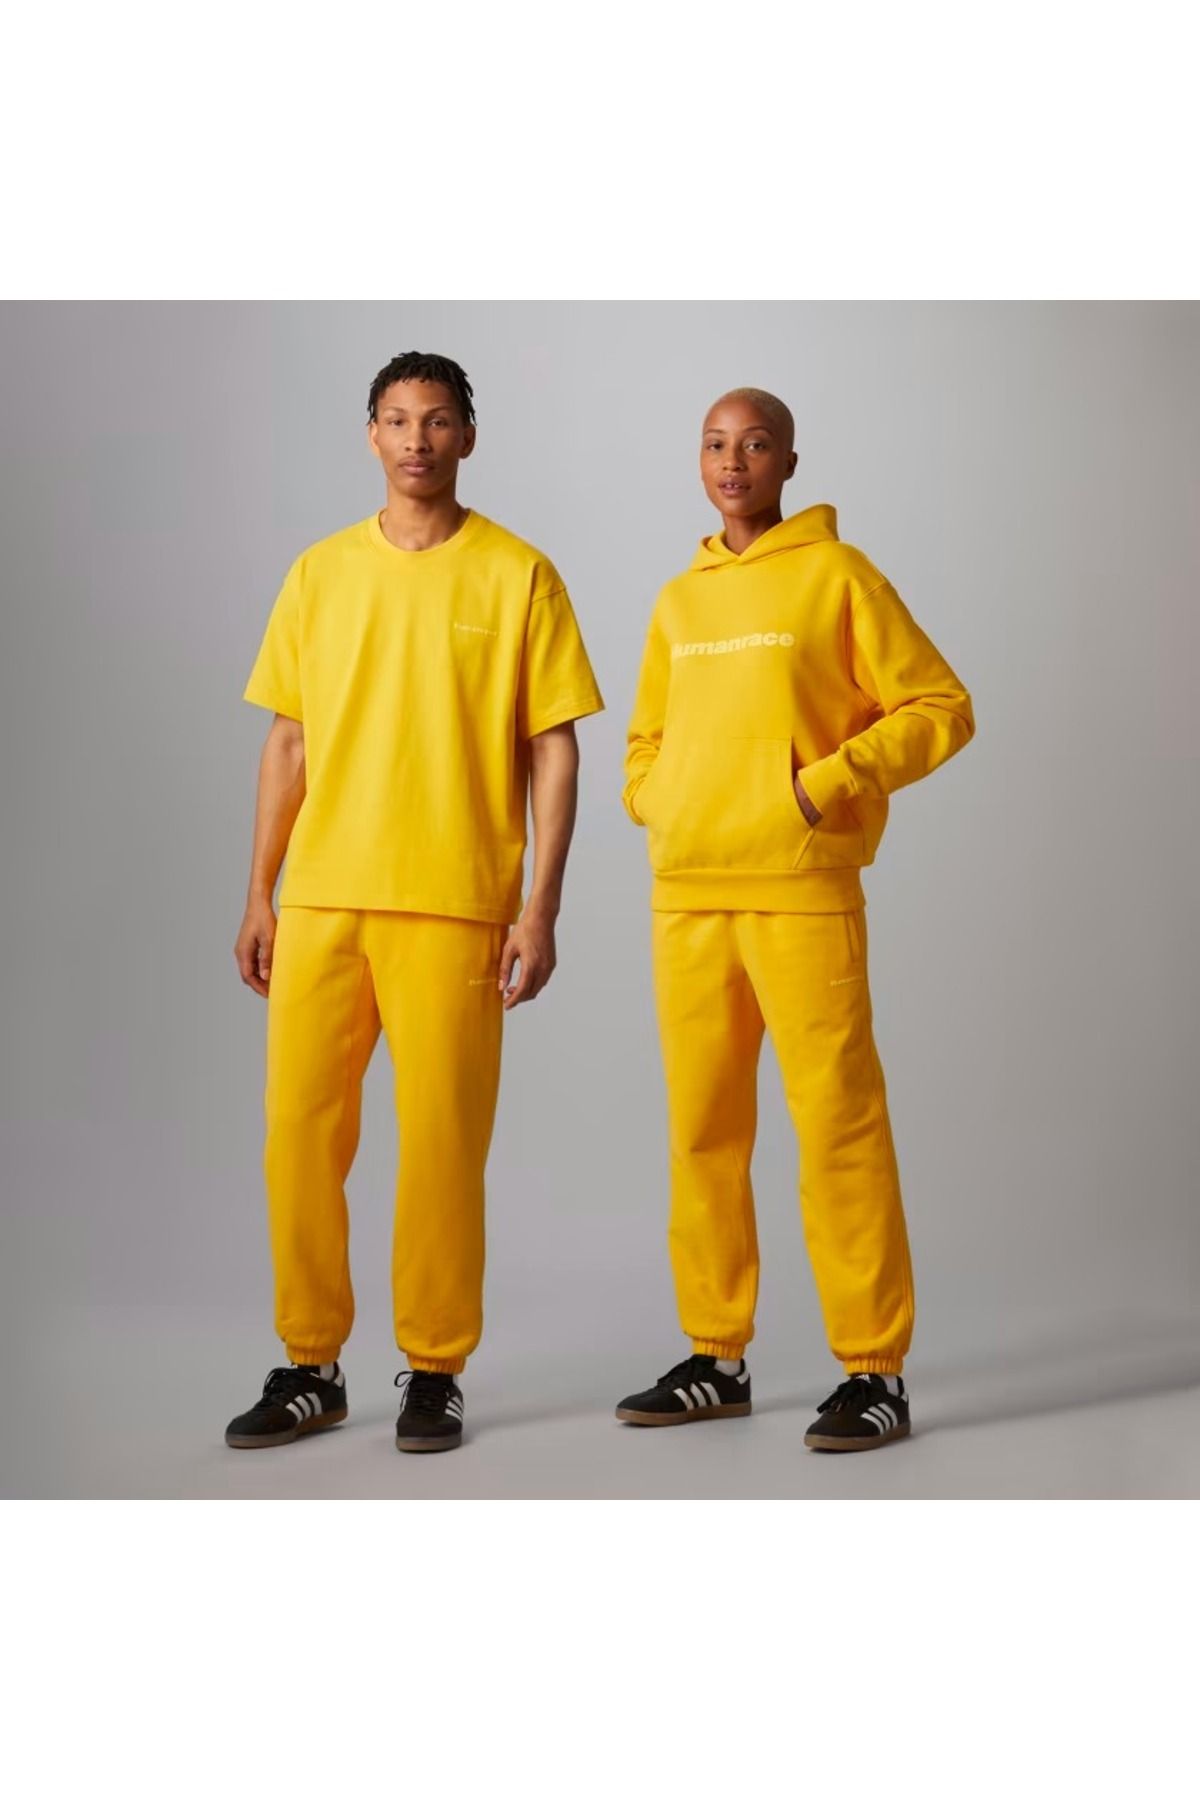 adidas Pharrell Williams Humanrace basics unisex sarı eşofman altı hg2685